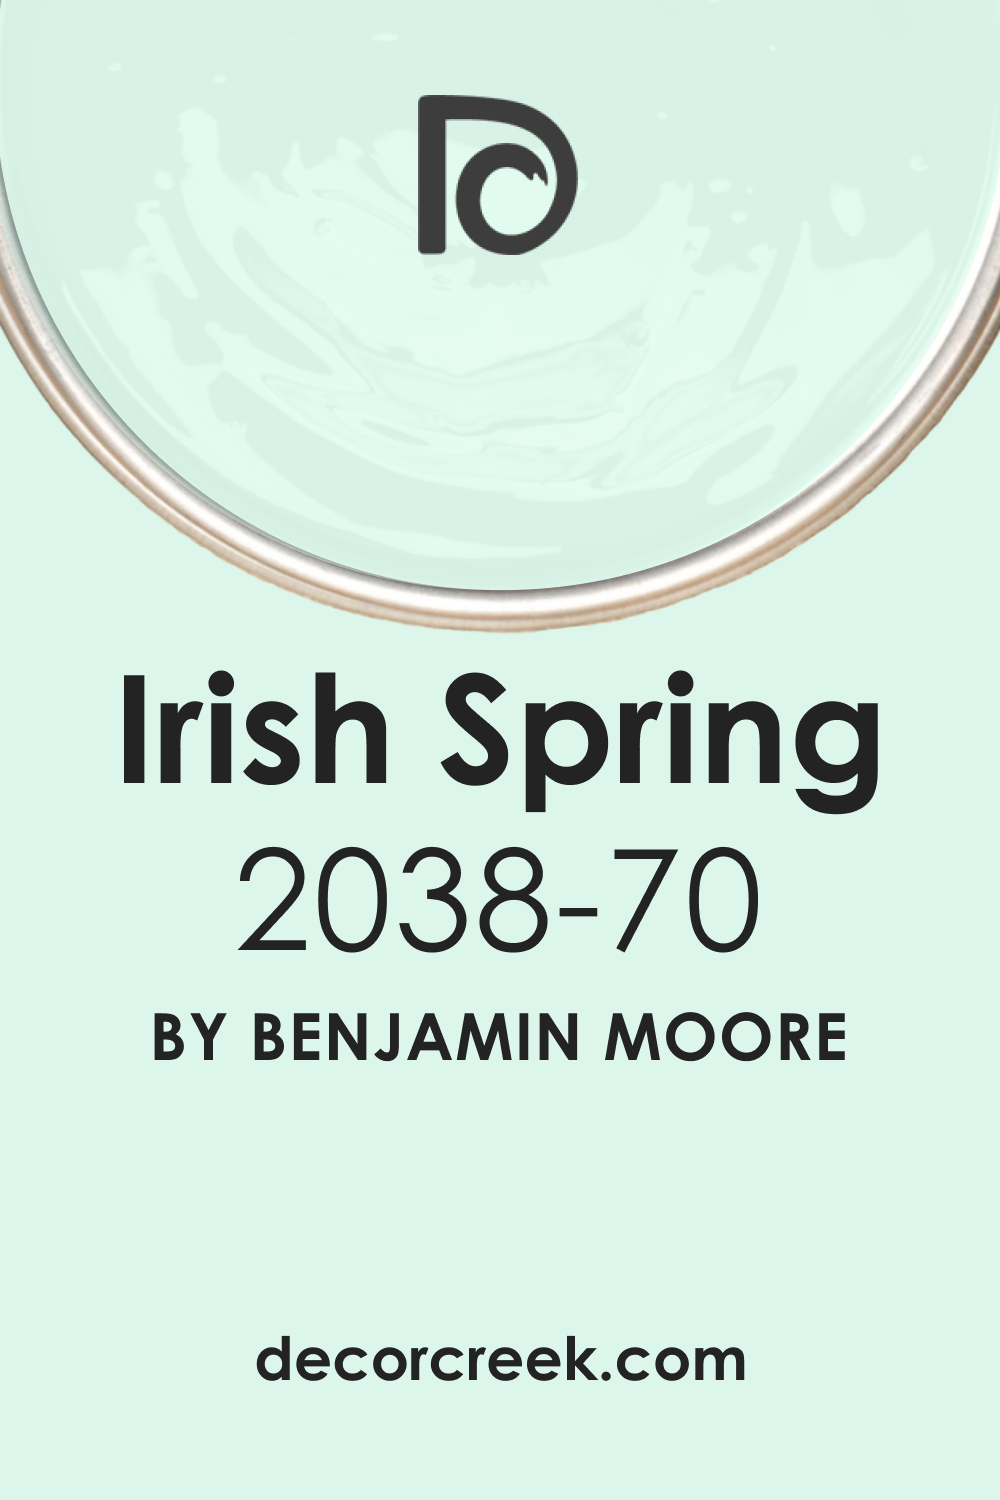 Irish Spring 2038-70 Paint Color by Benjamin Moore